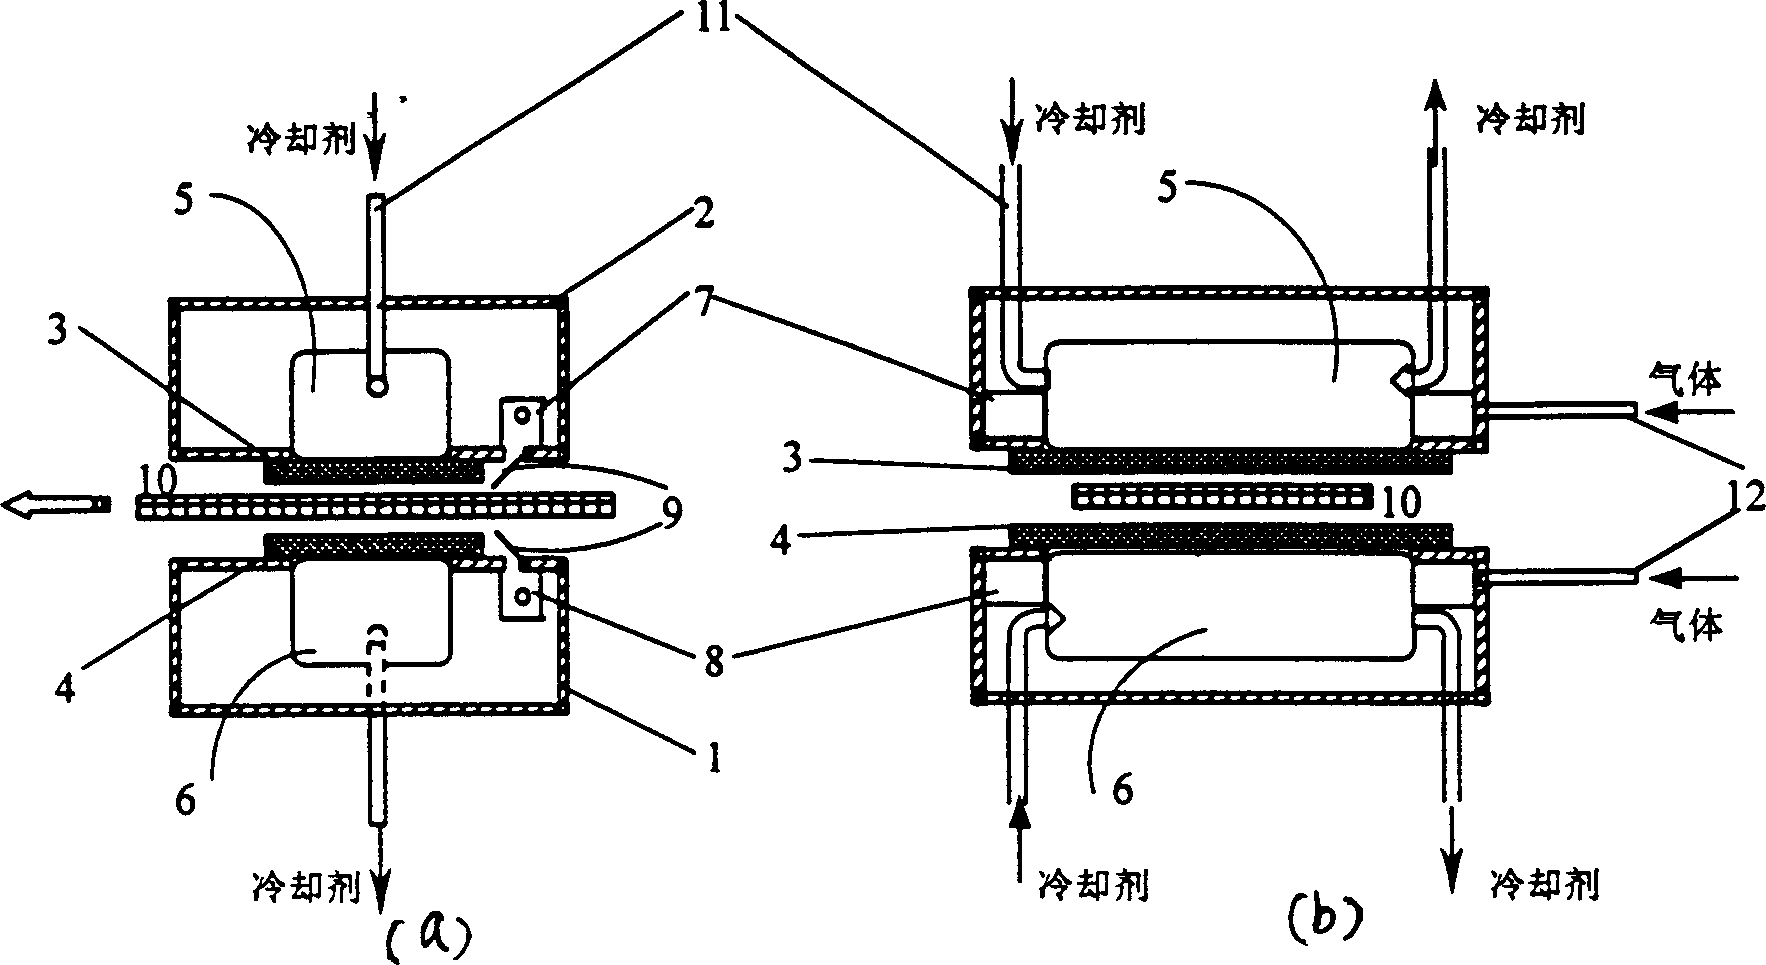 Normal-pressure low-temperature plasma treater for modifying fiber surface